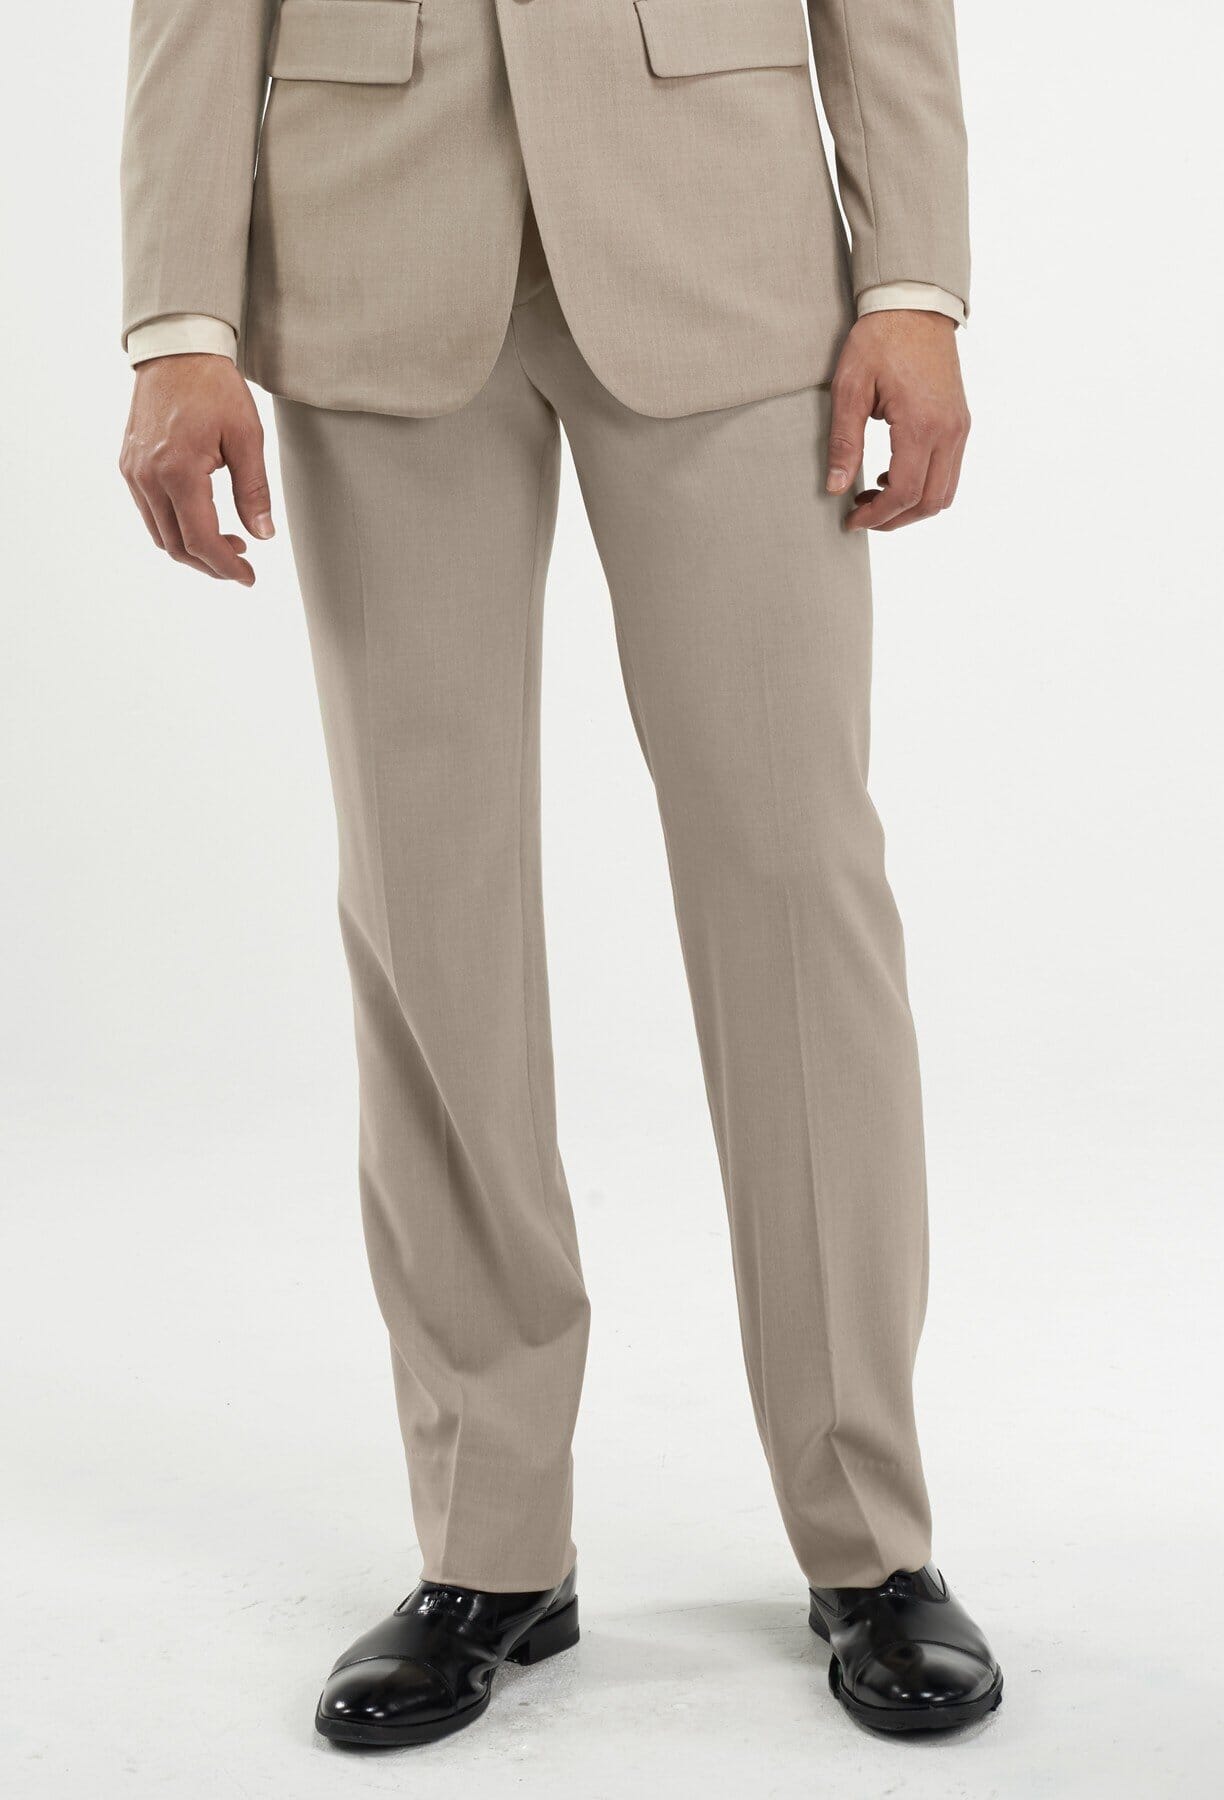 Mens Gurkha Formal Business Dress Straight Long Suits Pants Trousers  Vintage HOT | eBay